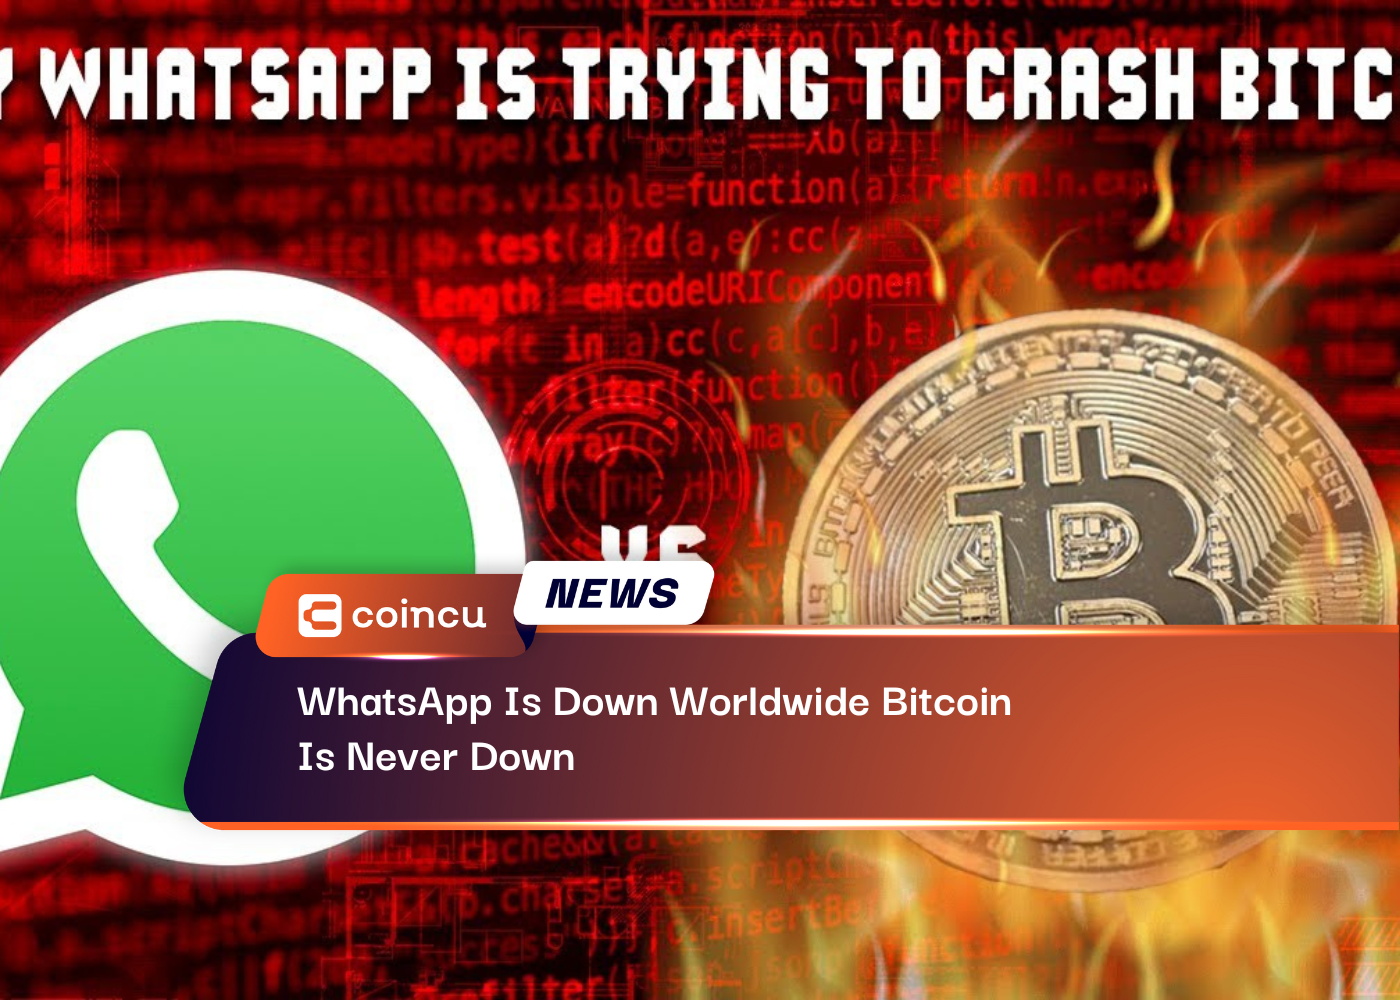 WhatsApp Is Down Worldwide Bitcoin